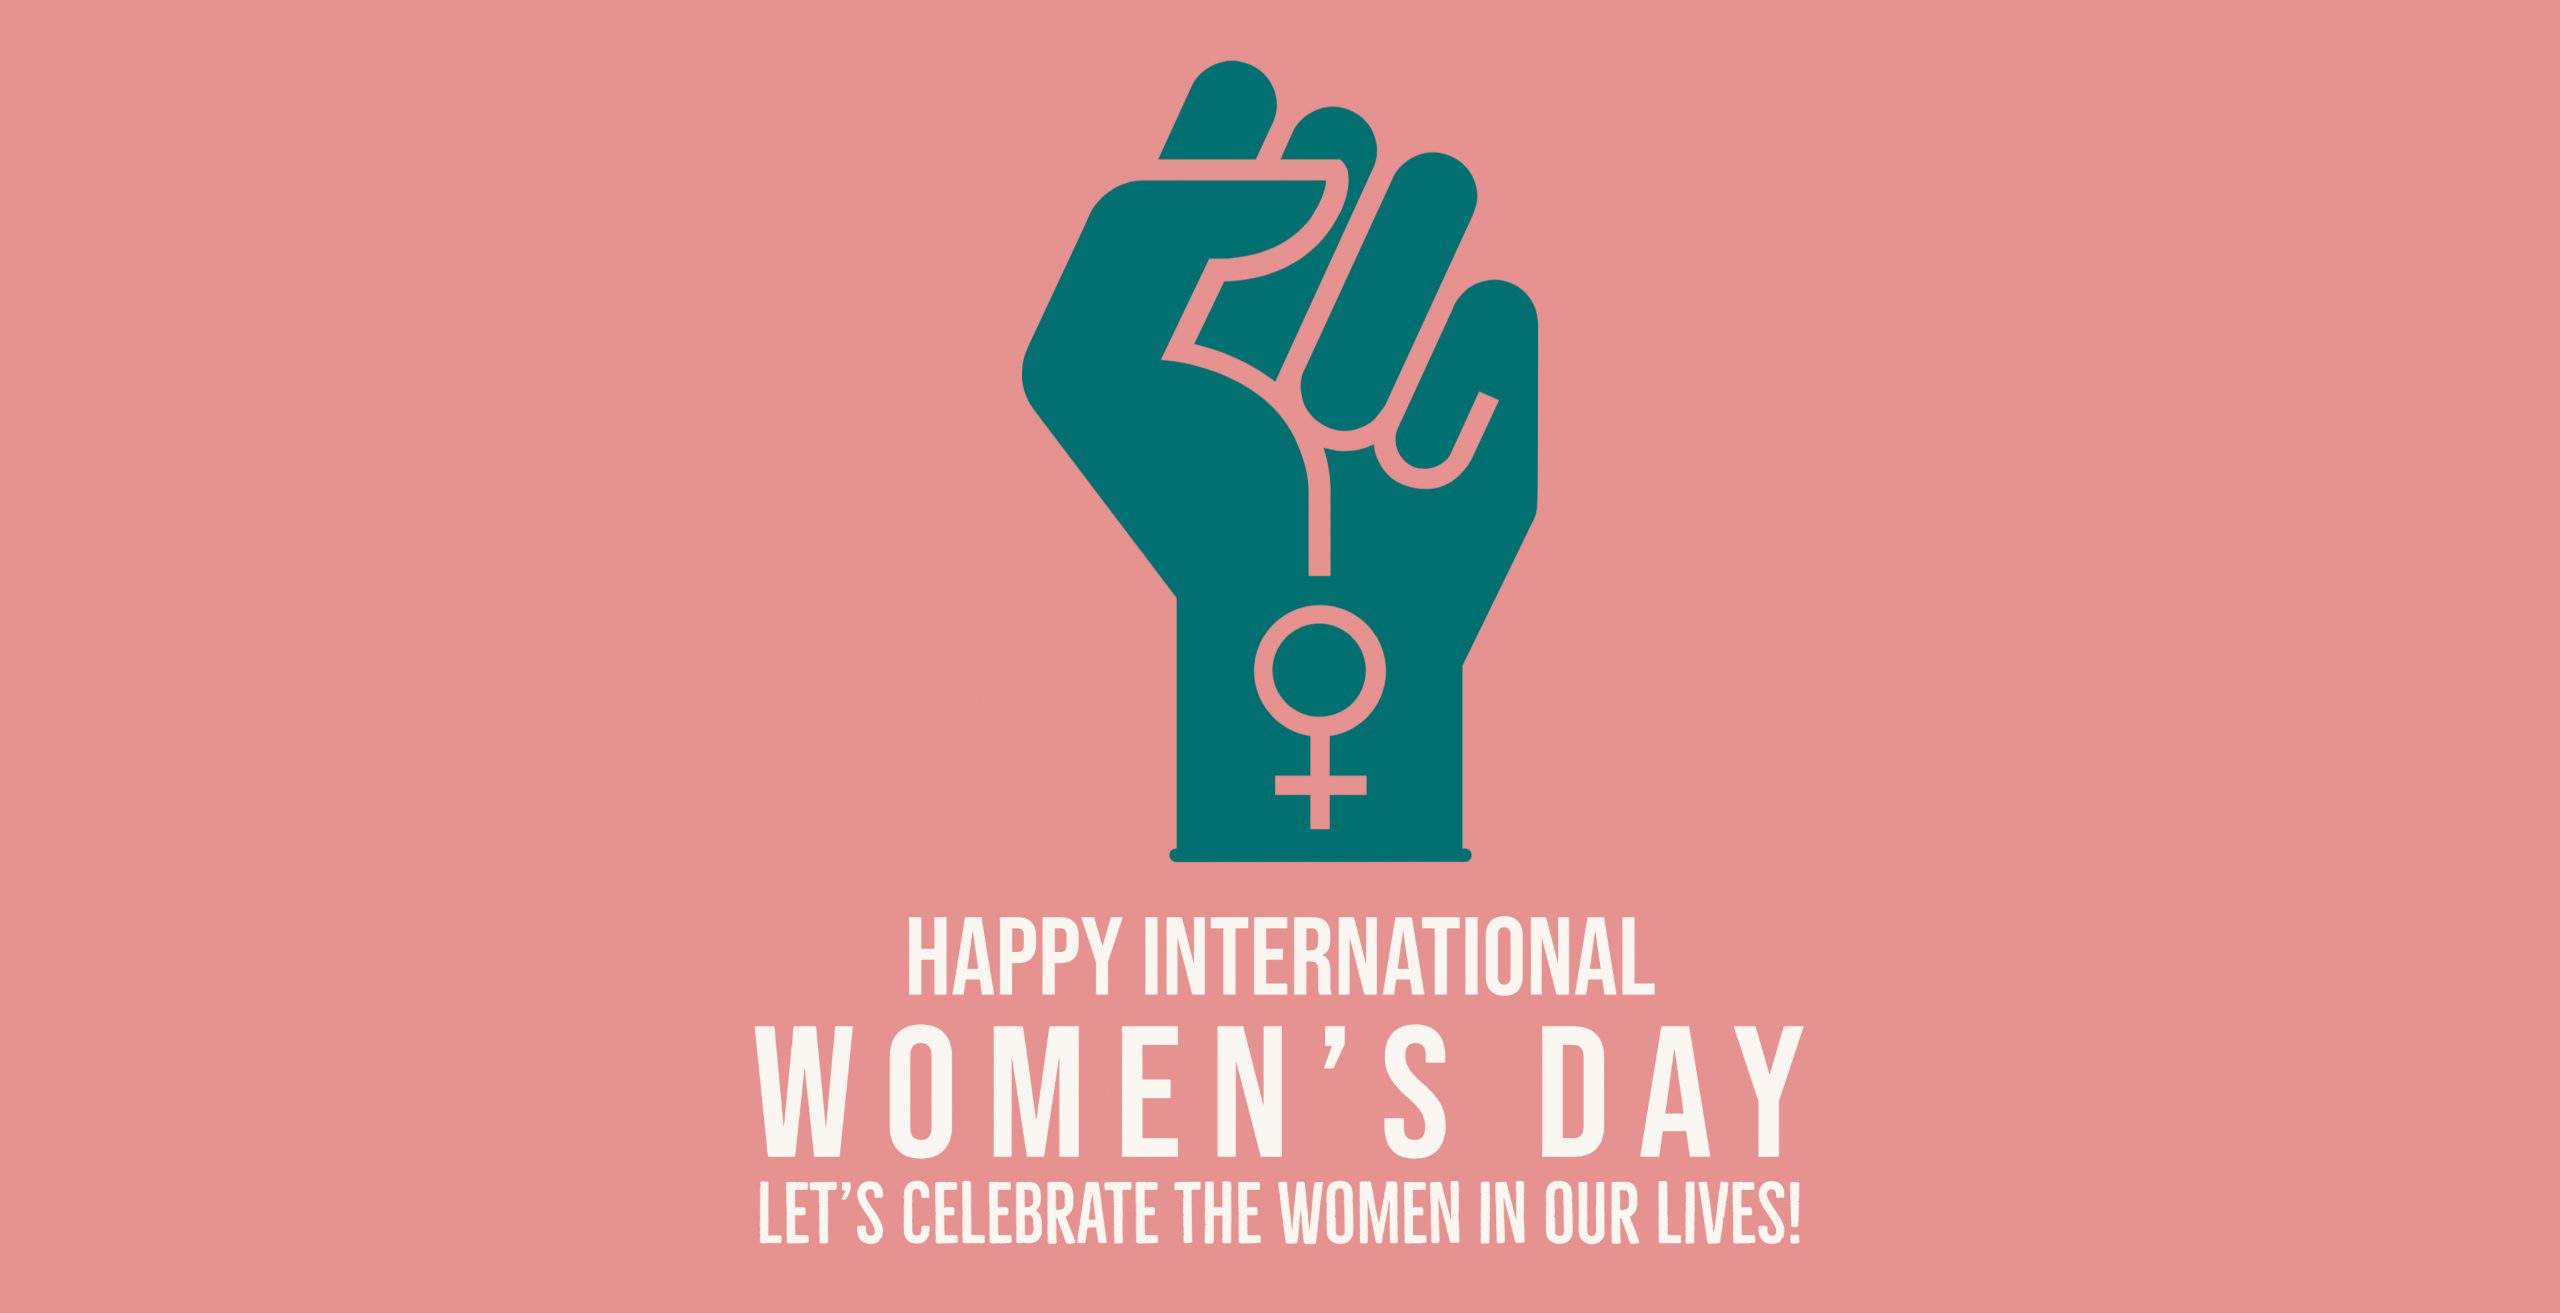 International Women S Day Celebrating Women S Achievements And Raising Awareness For Gender